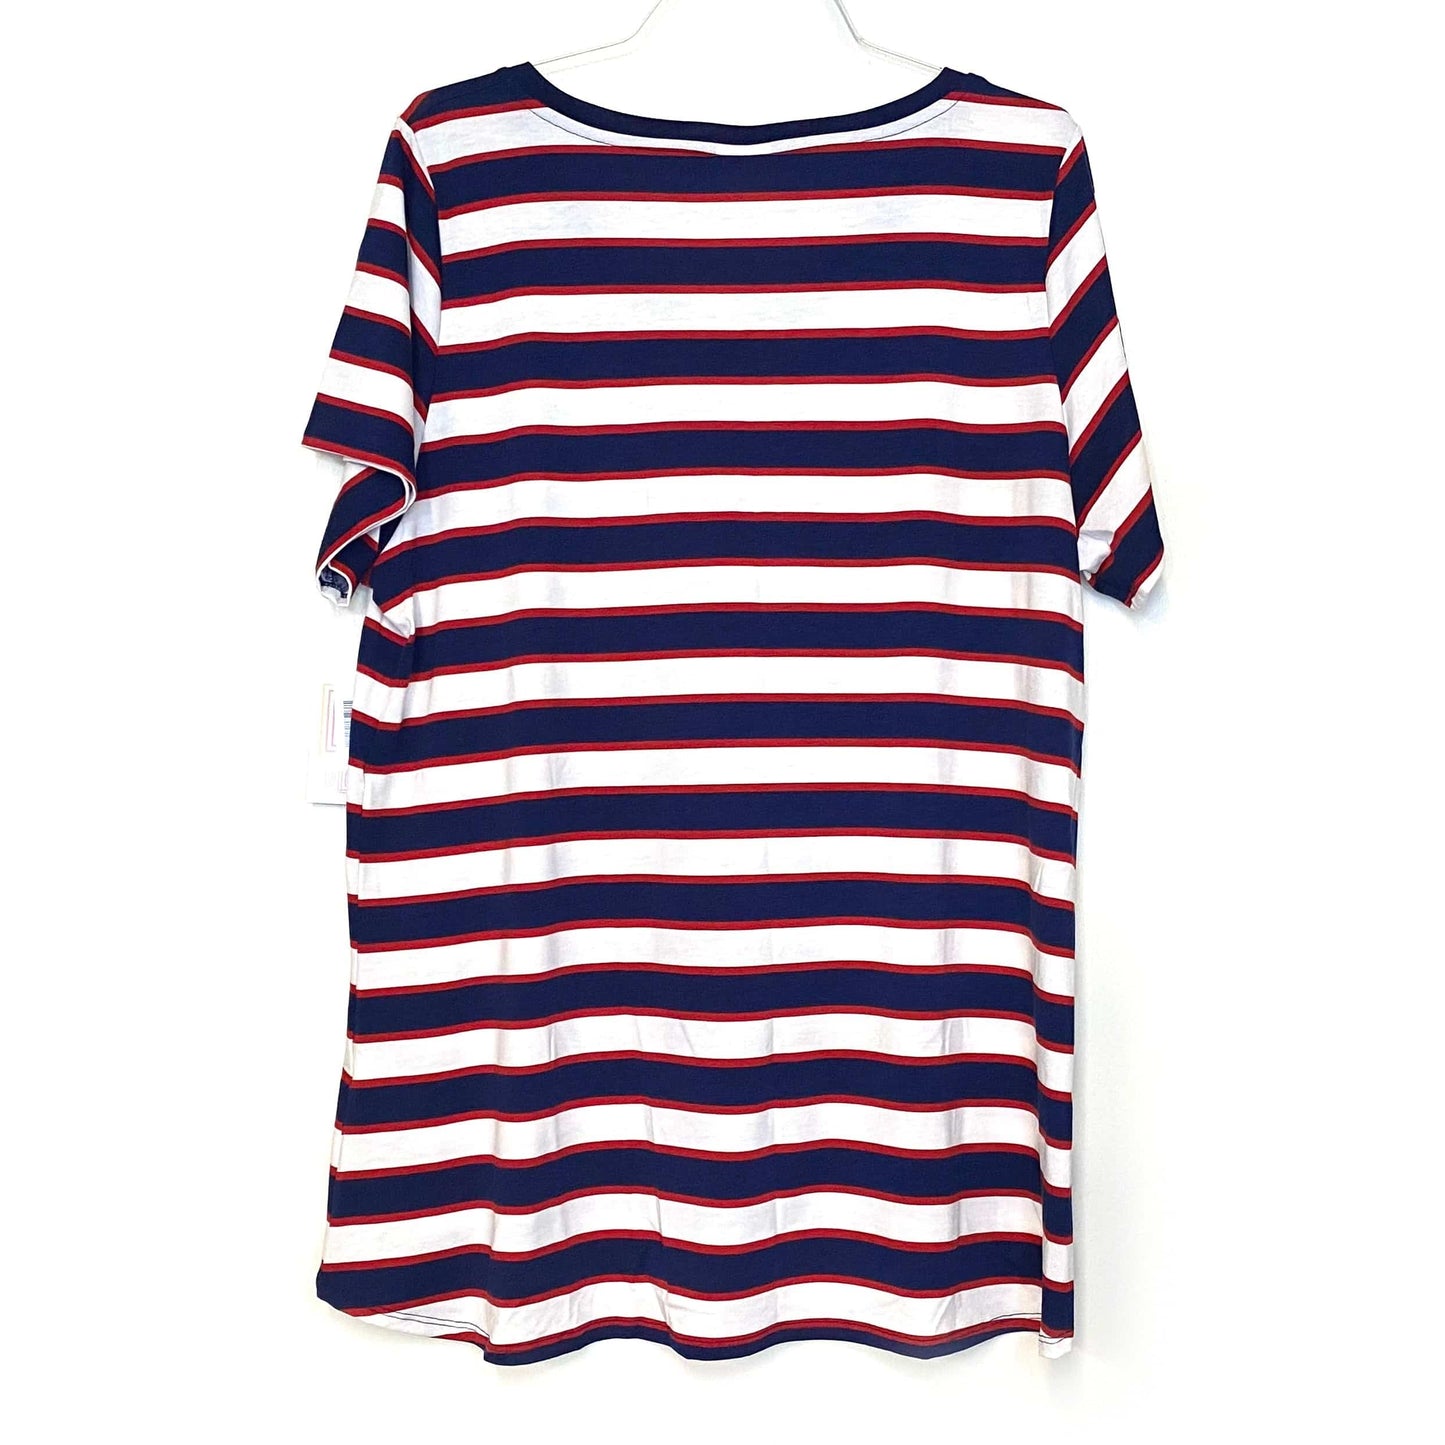 LuLaRoe Womens Size 3XL Red White/Blue Christy T Striped T-Shirt Shirt S/s NWT